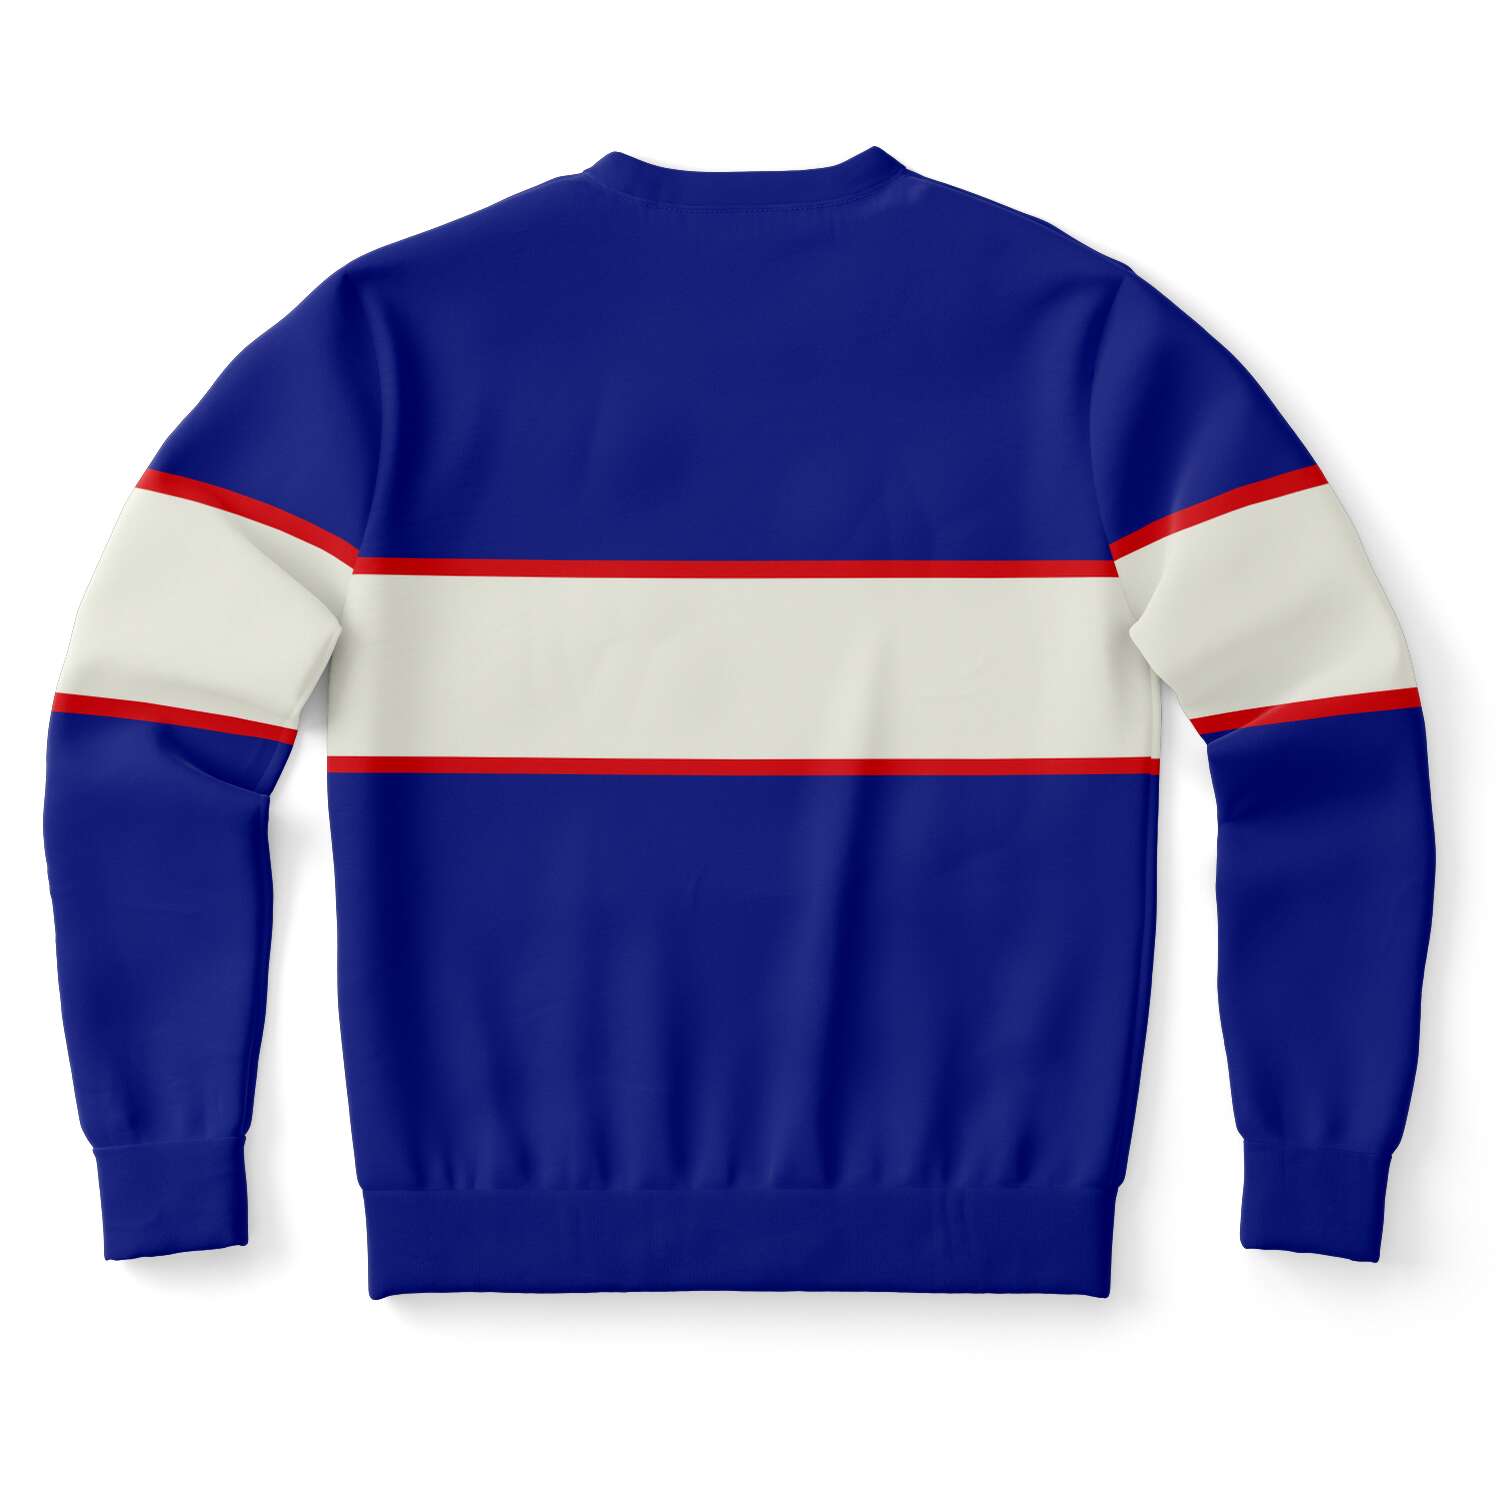 Apres Ski Sweatshirt Sweater, Royal Blue White Retro Vintage Striped Winter Holiday Sports Party Skiing 80s 90s Y2K Cotton Top Clothes Starcove Fashion